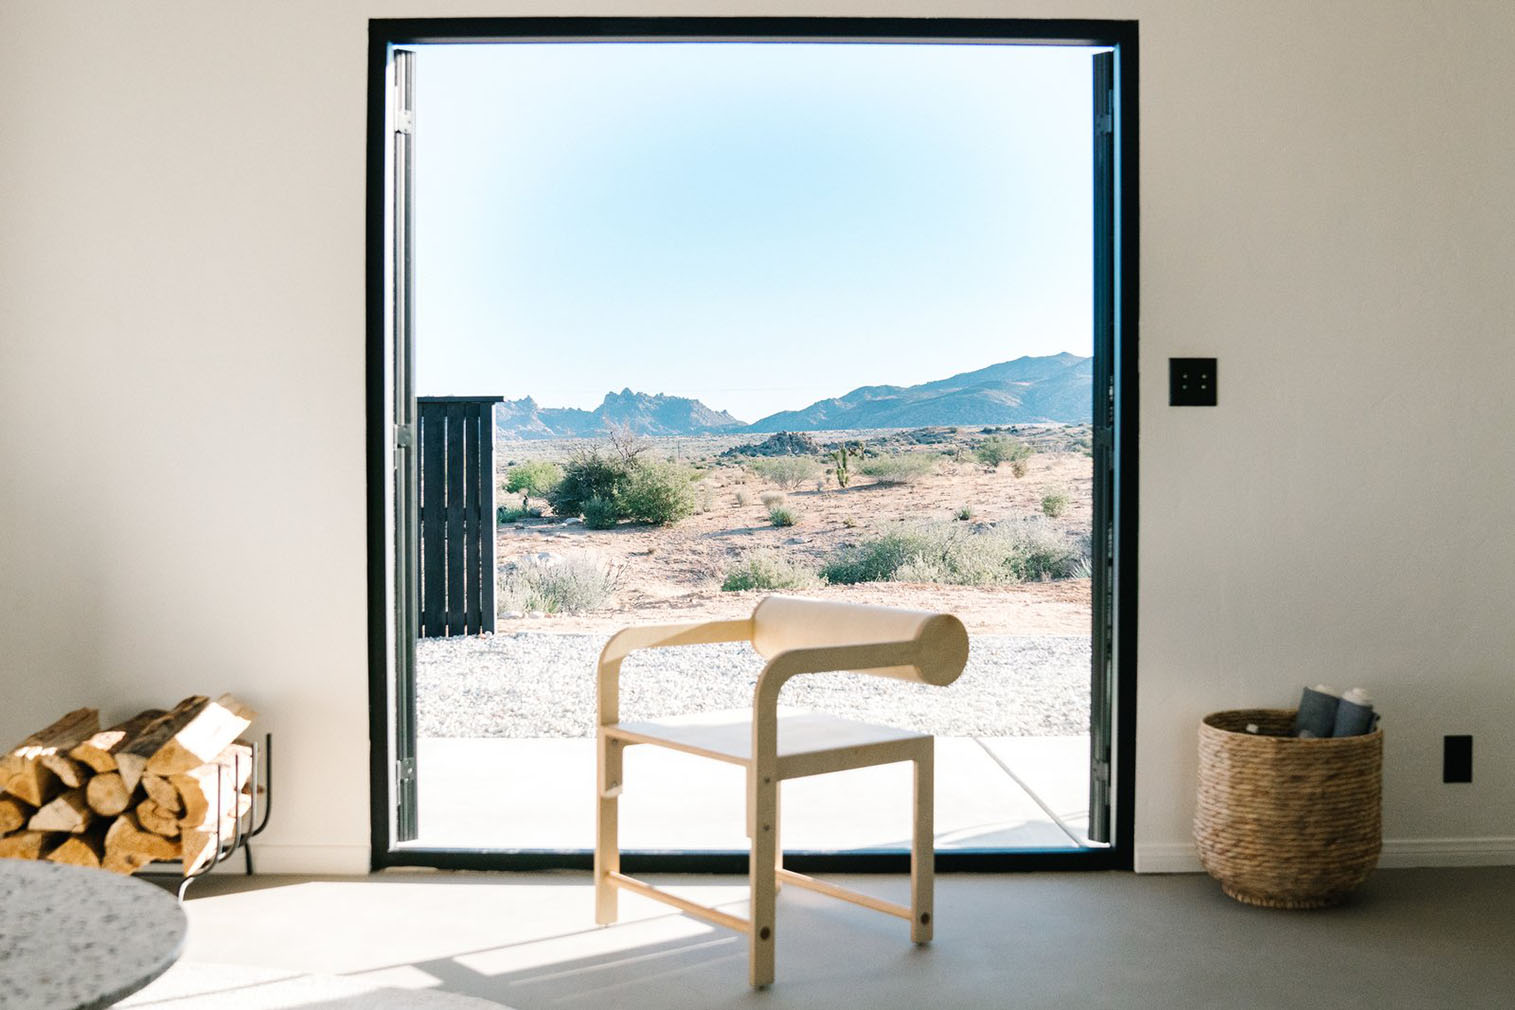 Explore a minimalist desert retreat in California’s Joshua Tree National Park